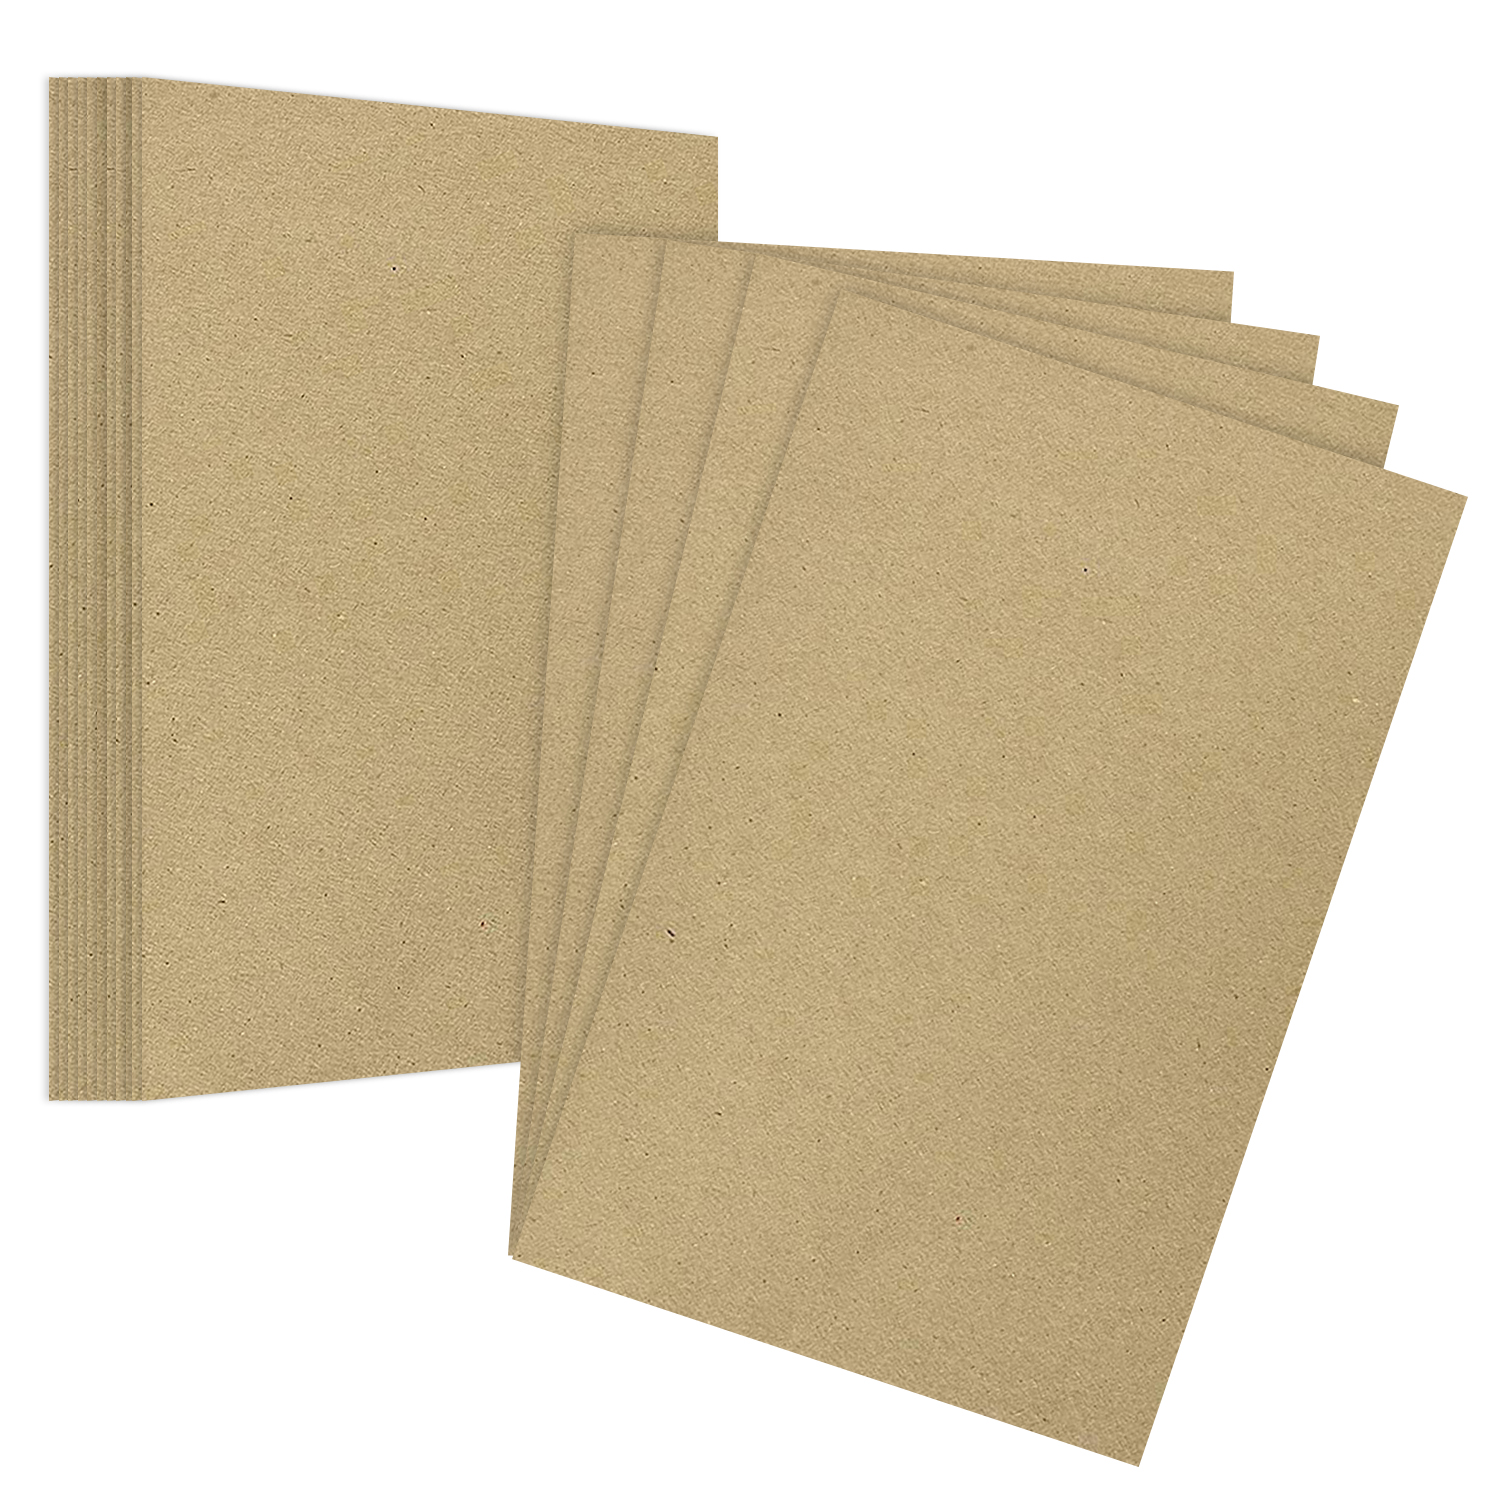 50 Sheets Chipboard 11 x 17 inch 22pt Light Weight Brown Kraft Cardboard 